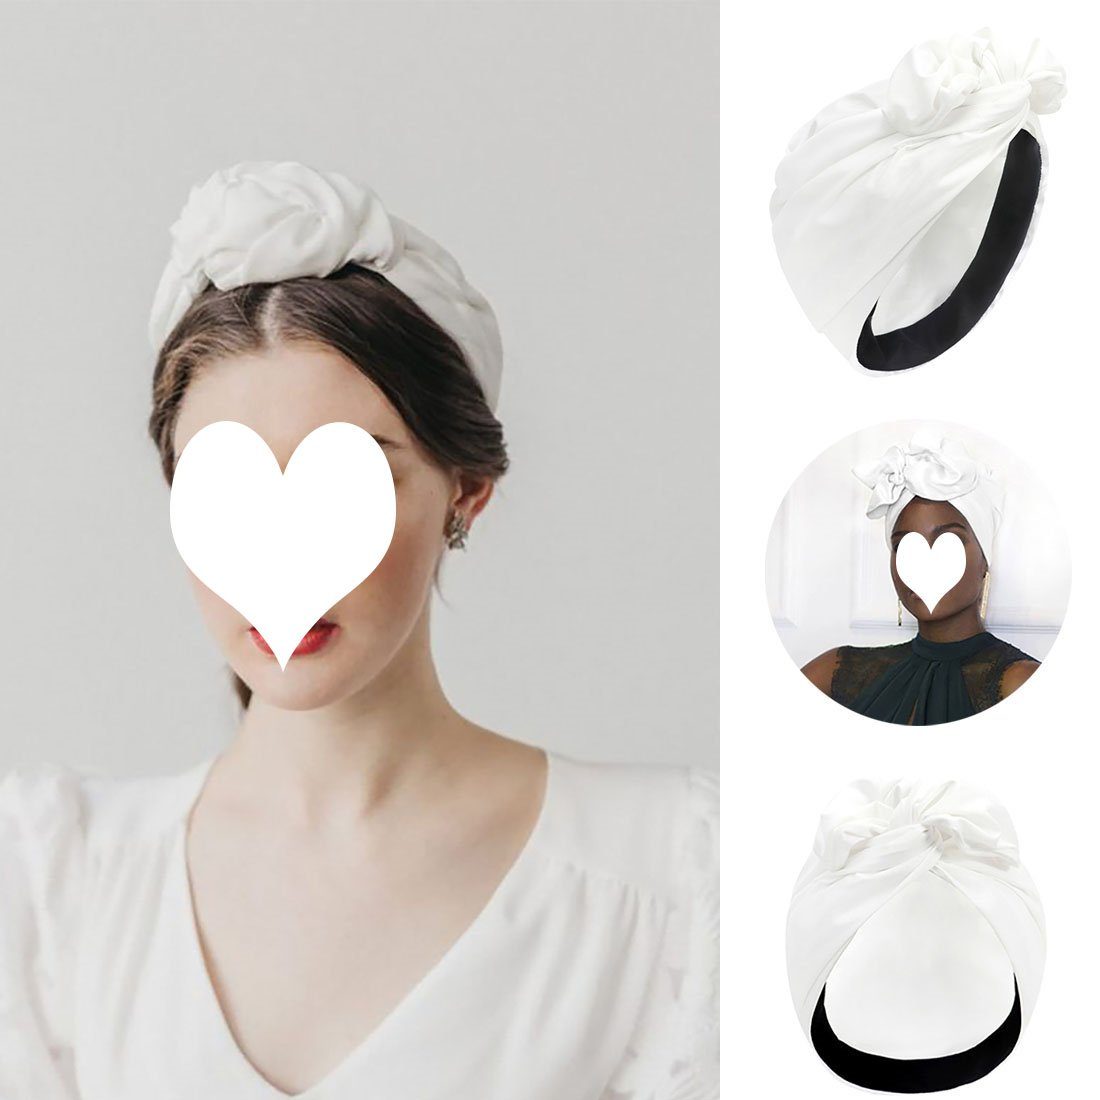 DÖRÖY Schlapphut Frauen Crossover Turban Hut, Mode Turban, Vintage Overhead Cap Weiß